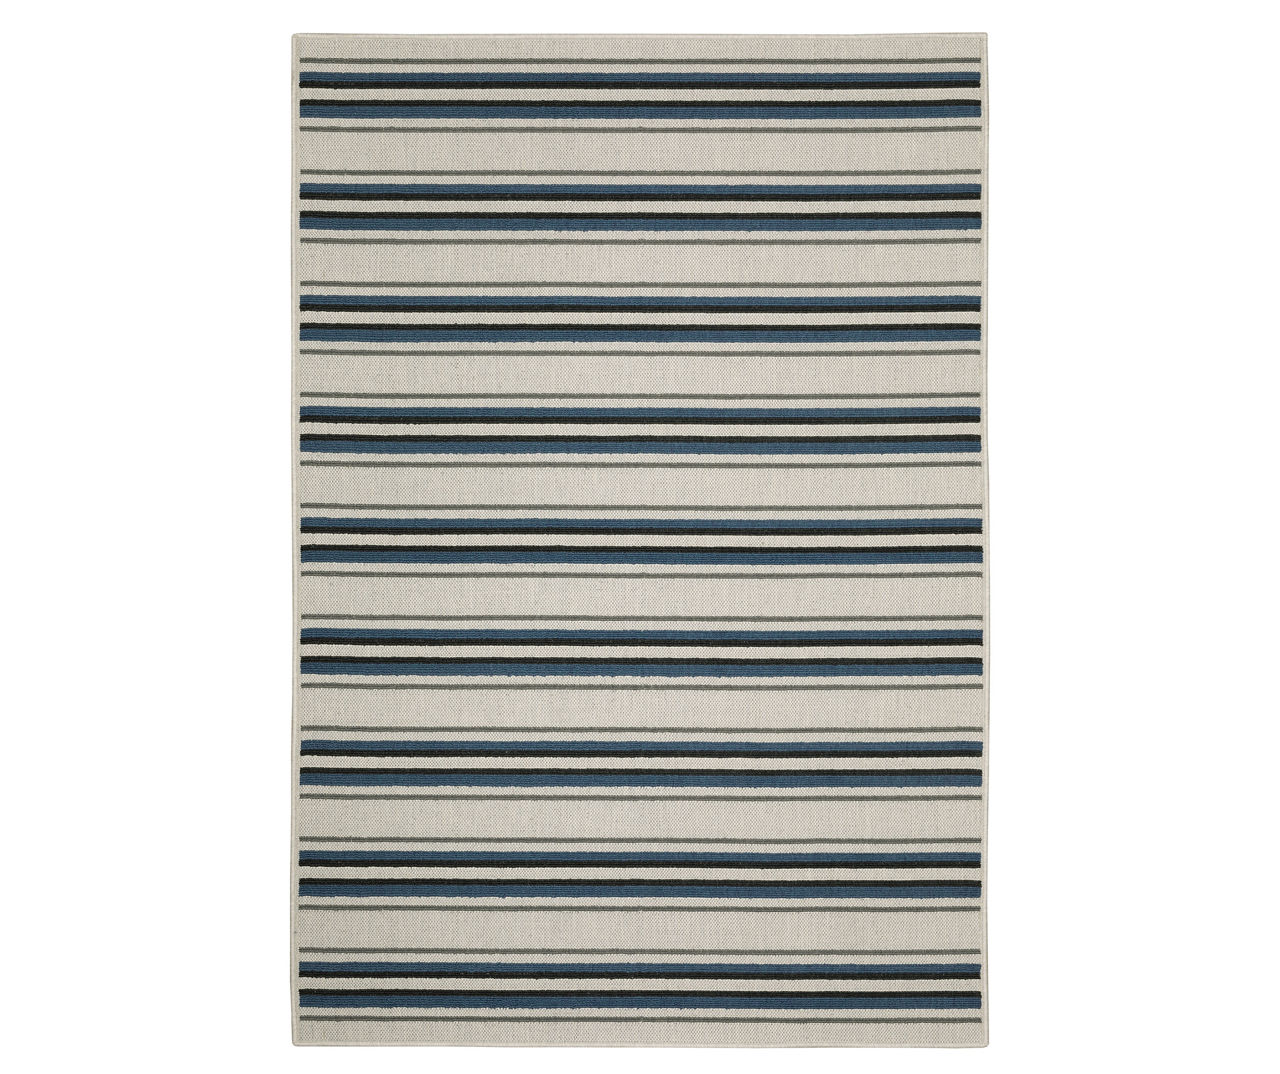 Torie Beige & Blue Stripe Outdoor Area Rug, (5.3' x 7.3')